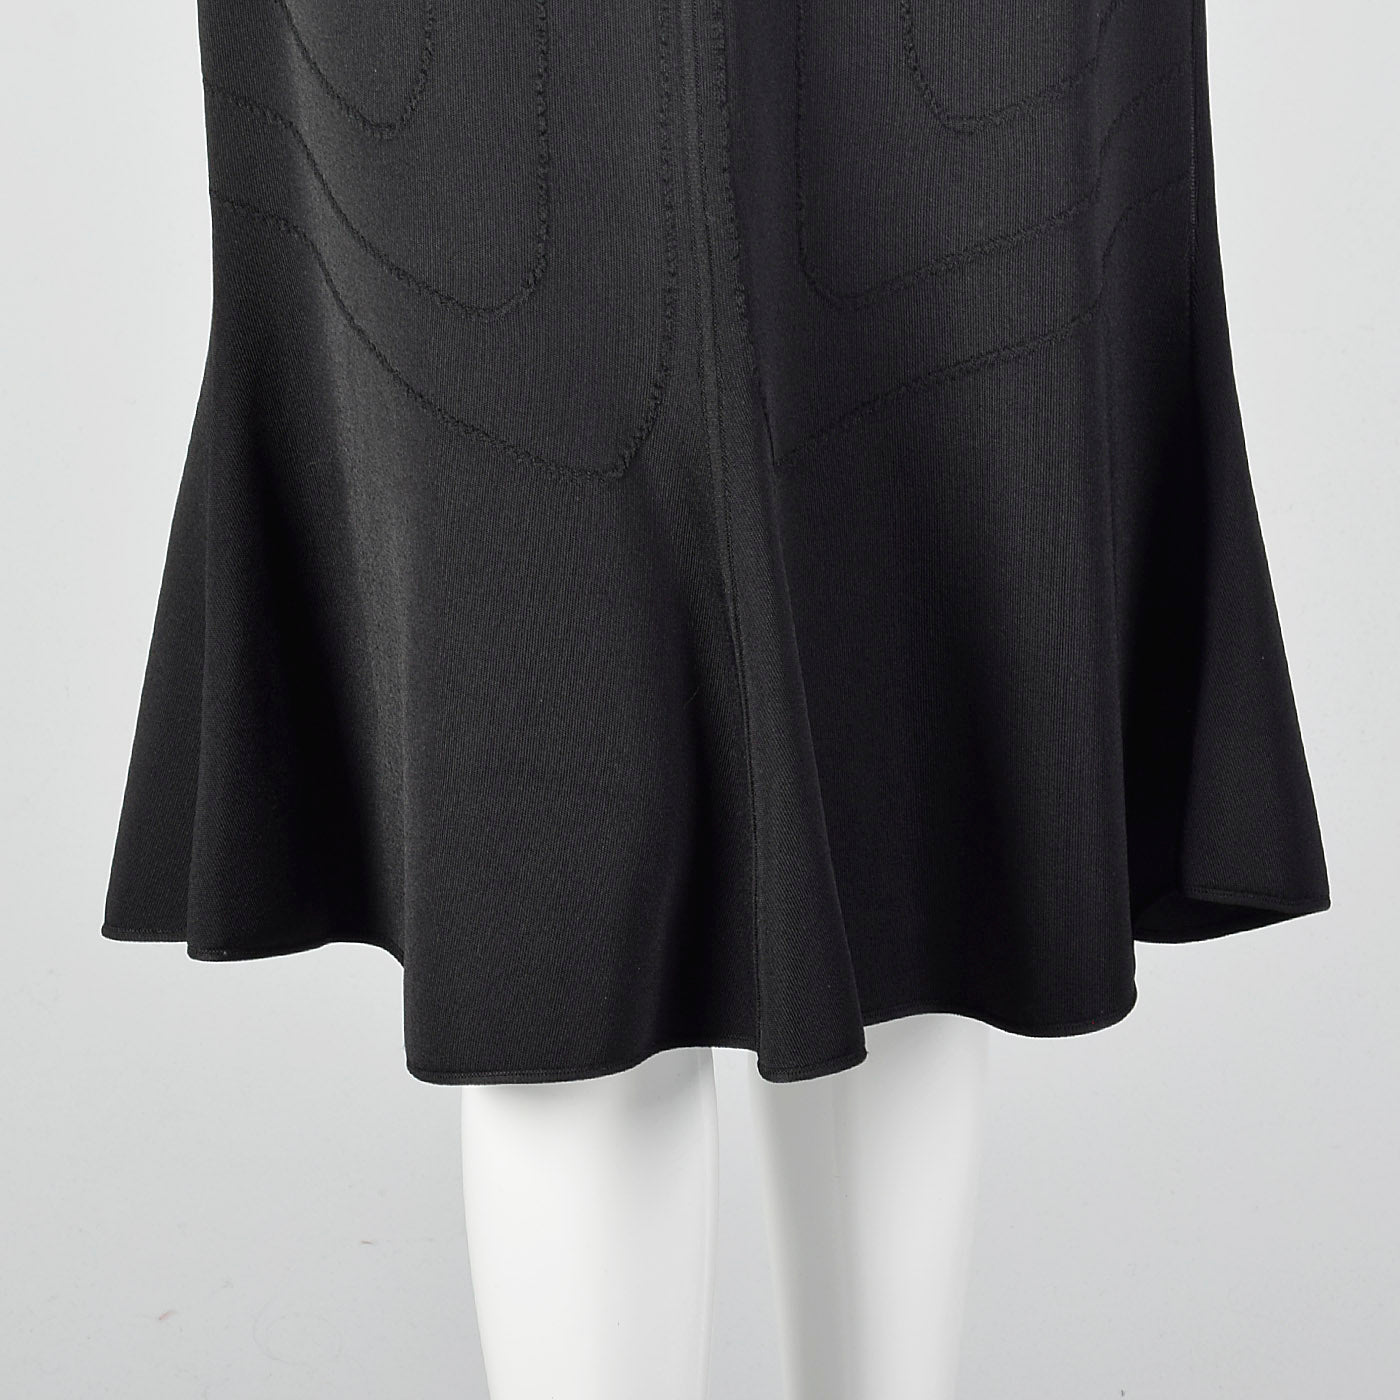 2010s Giorgio Armani Black Knit Dress